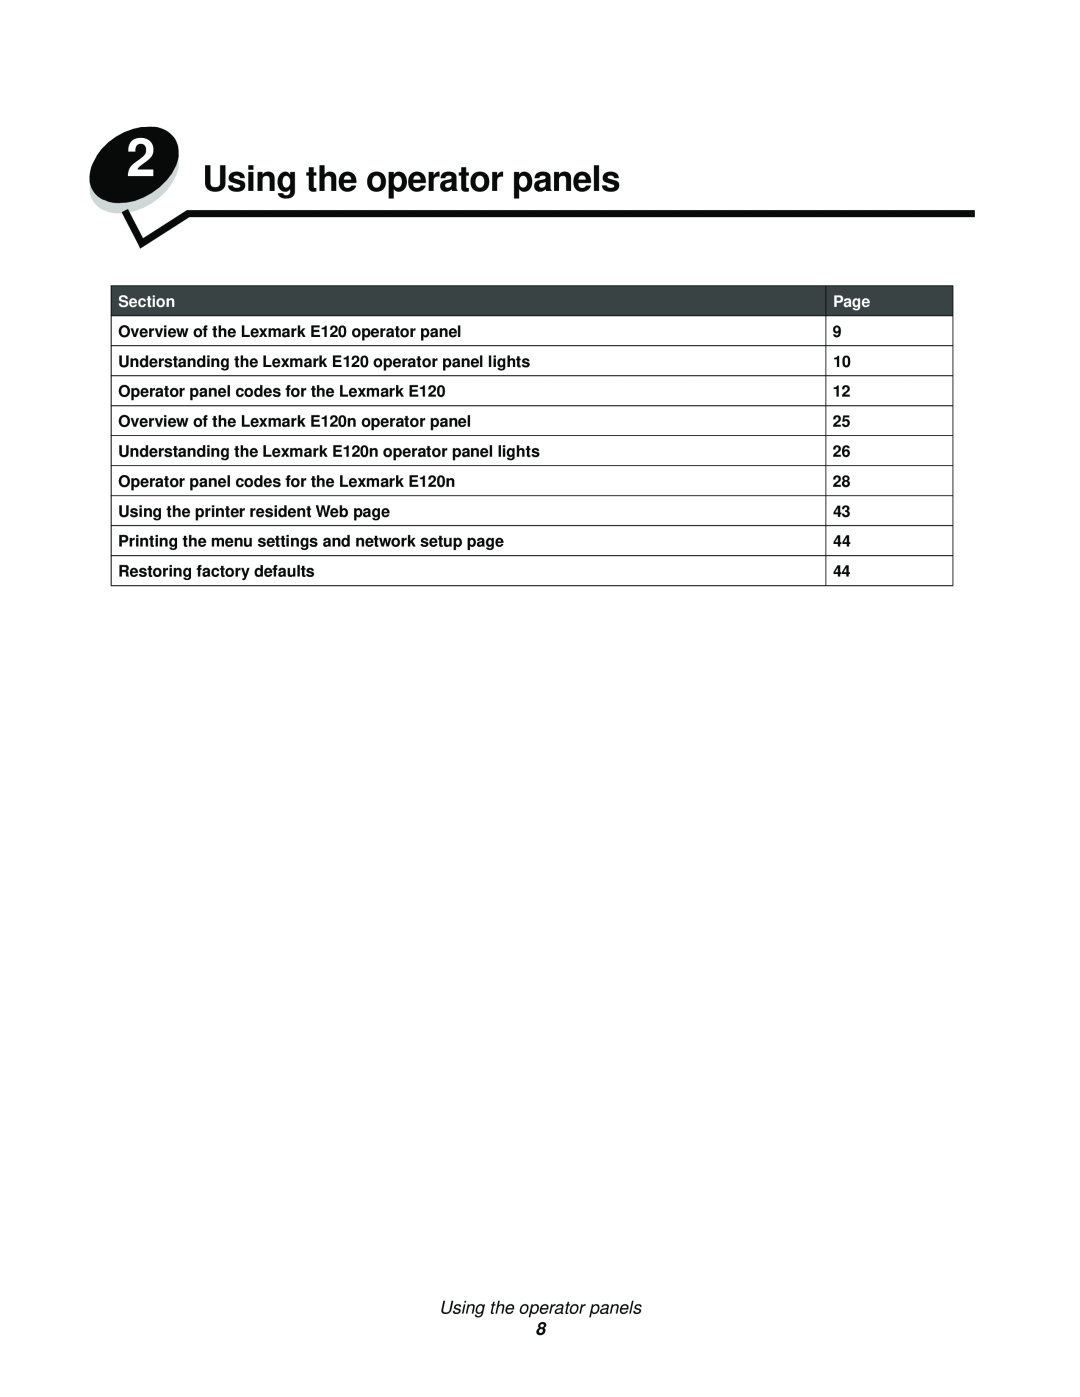 Lexmark manual Using the operator panels, Section, Page, Overview of the Lexmark E120 operator panel 